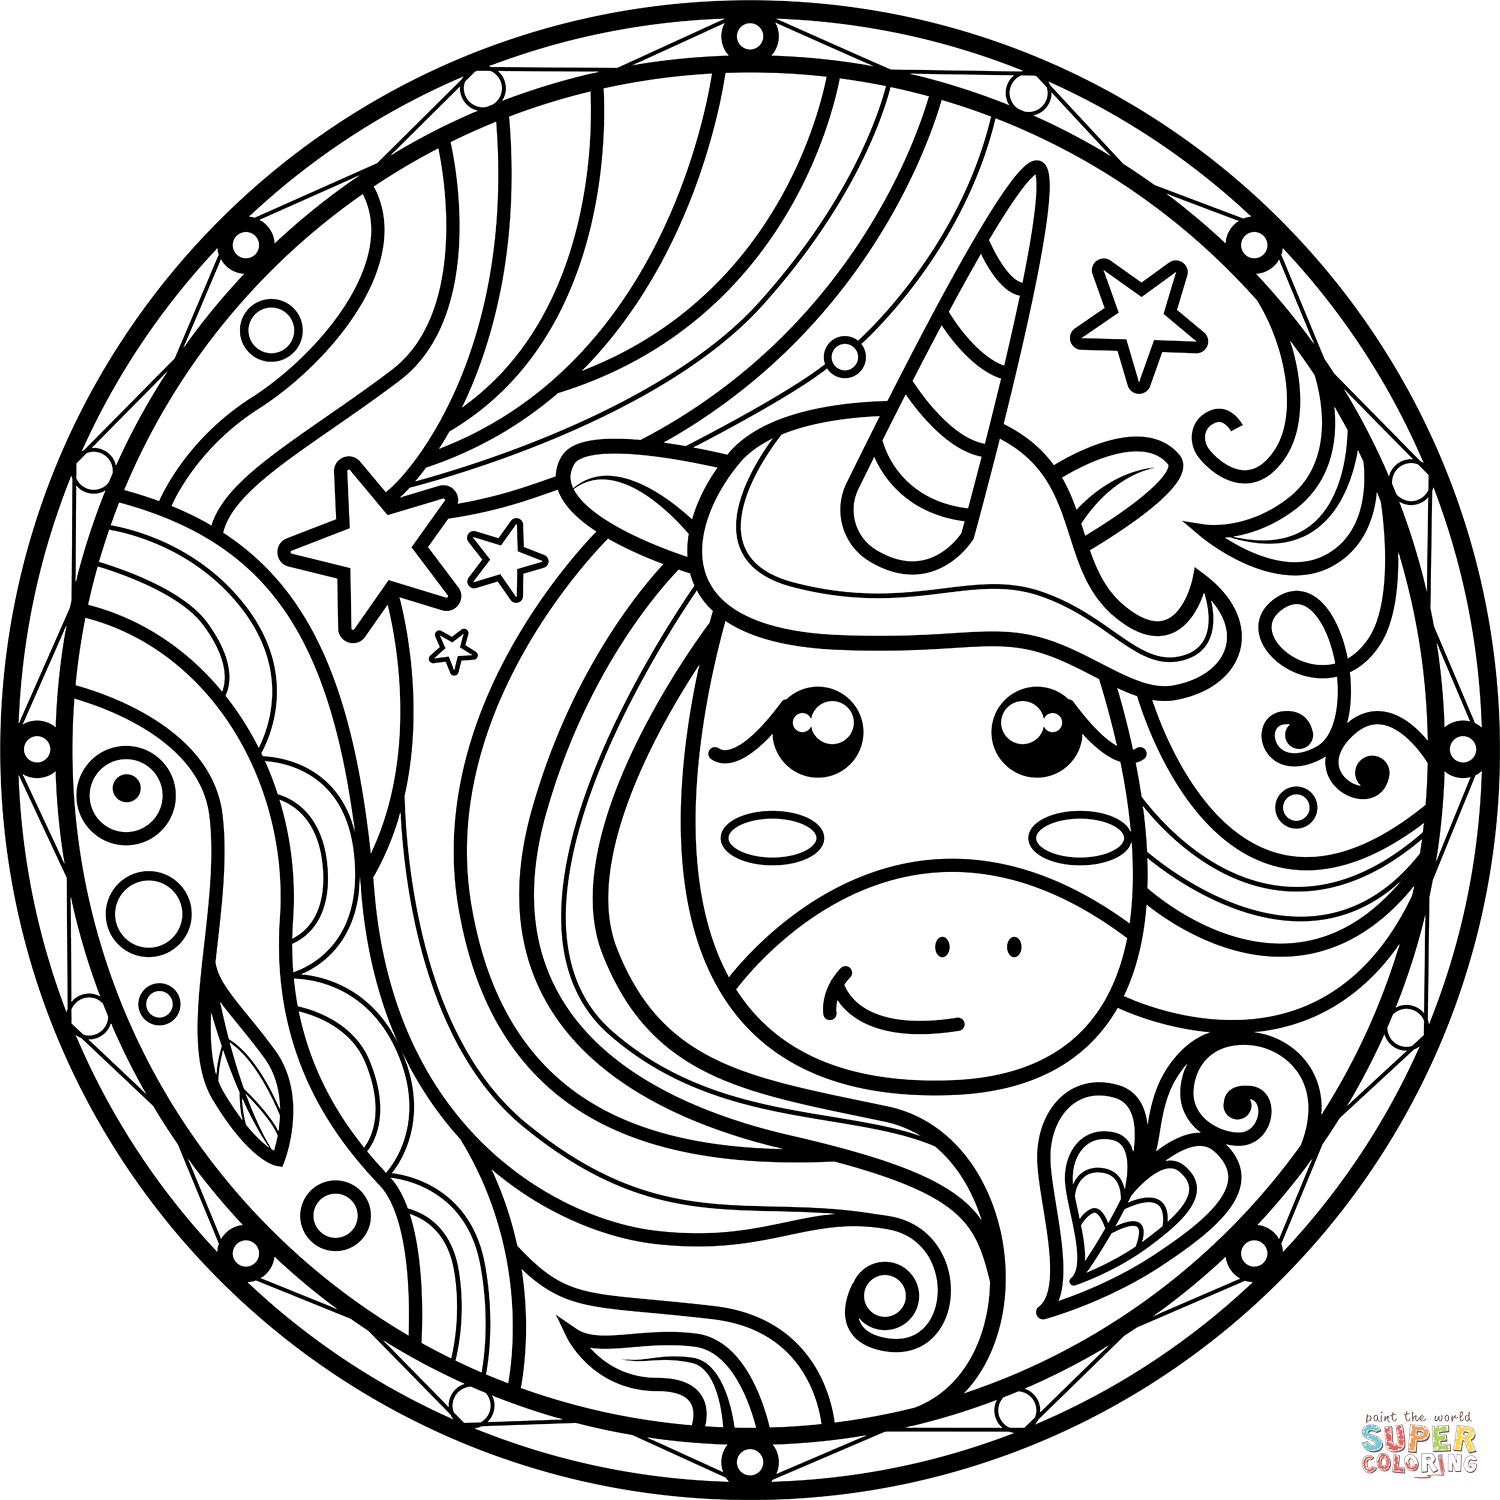 Unicorn mandala coloring page free printable coloring pages